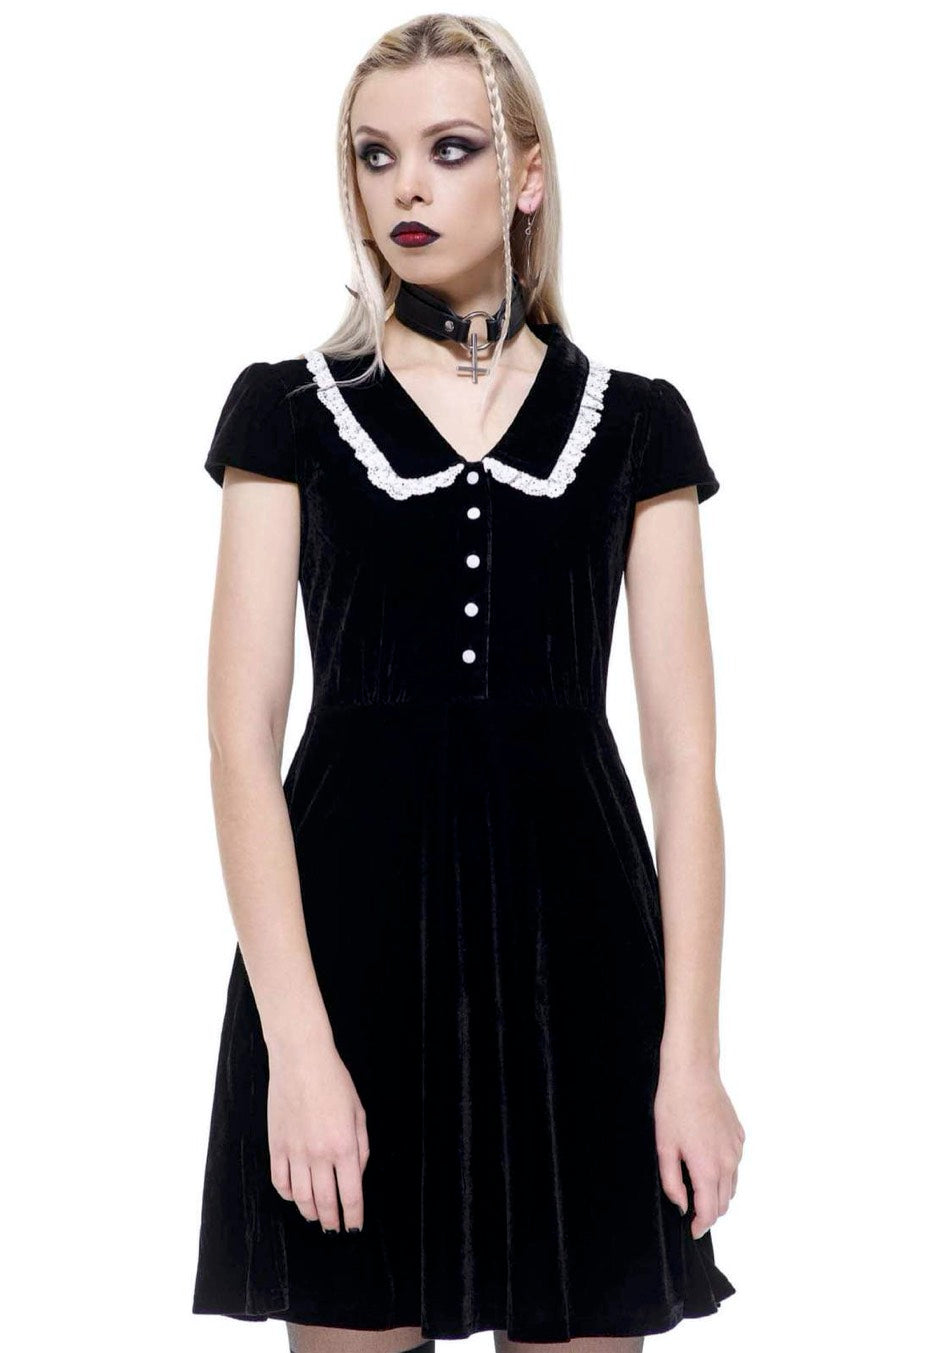 Killstar - Every Mourning Collar Black - Dress